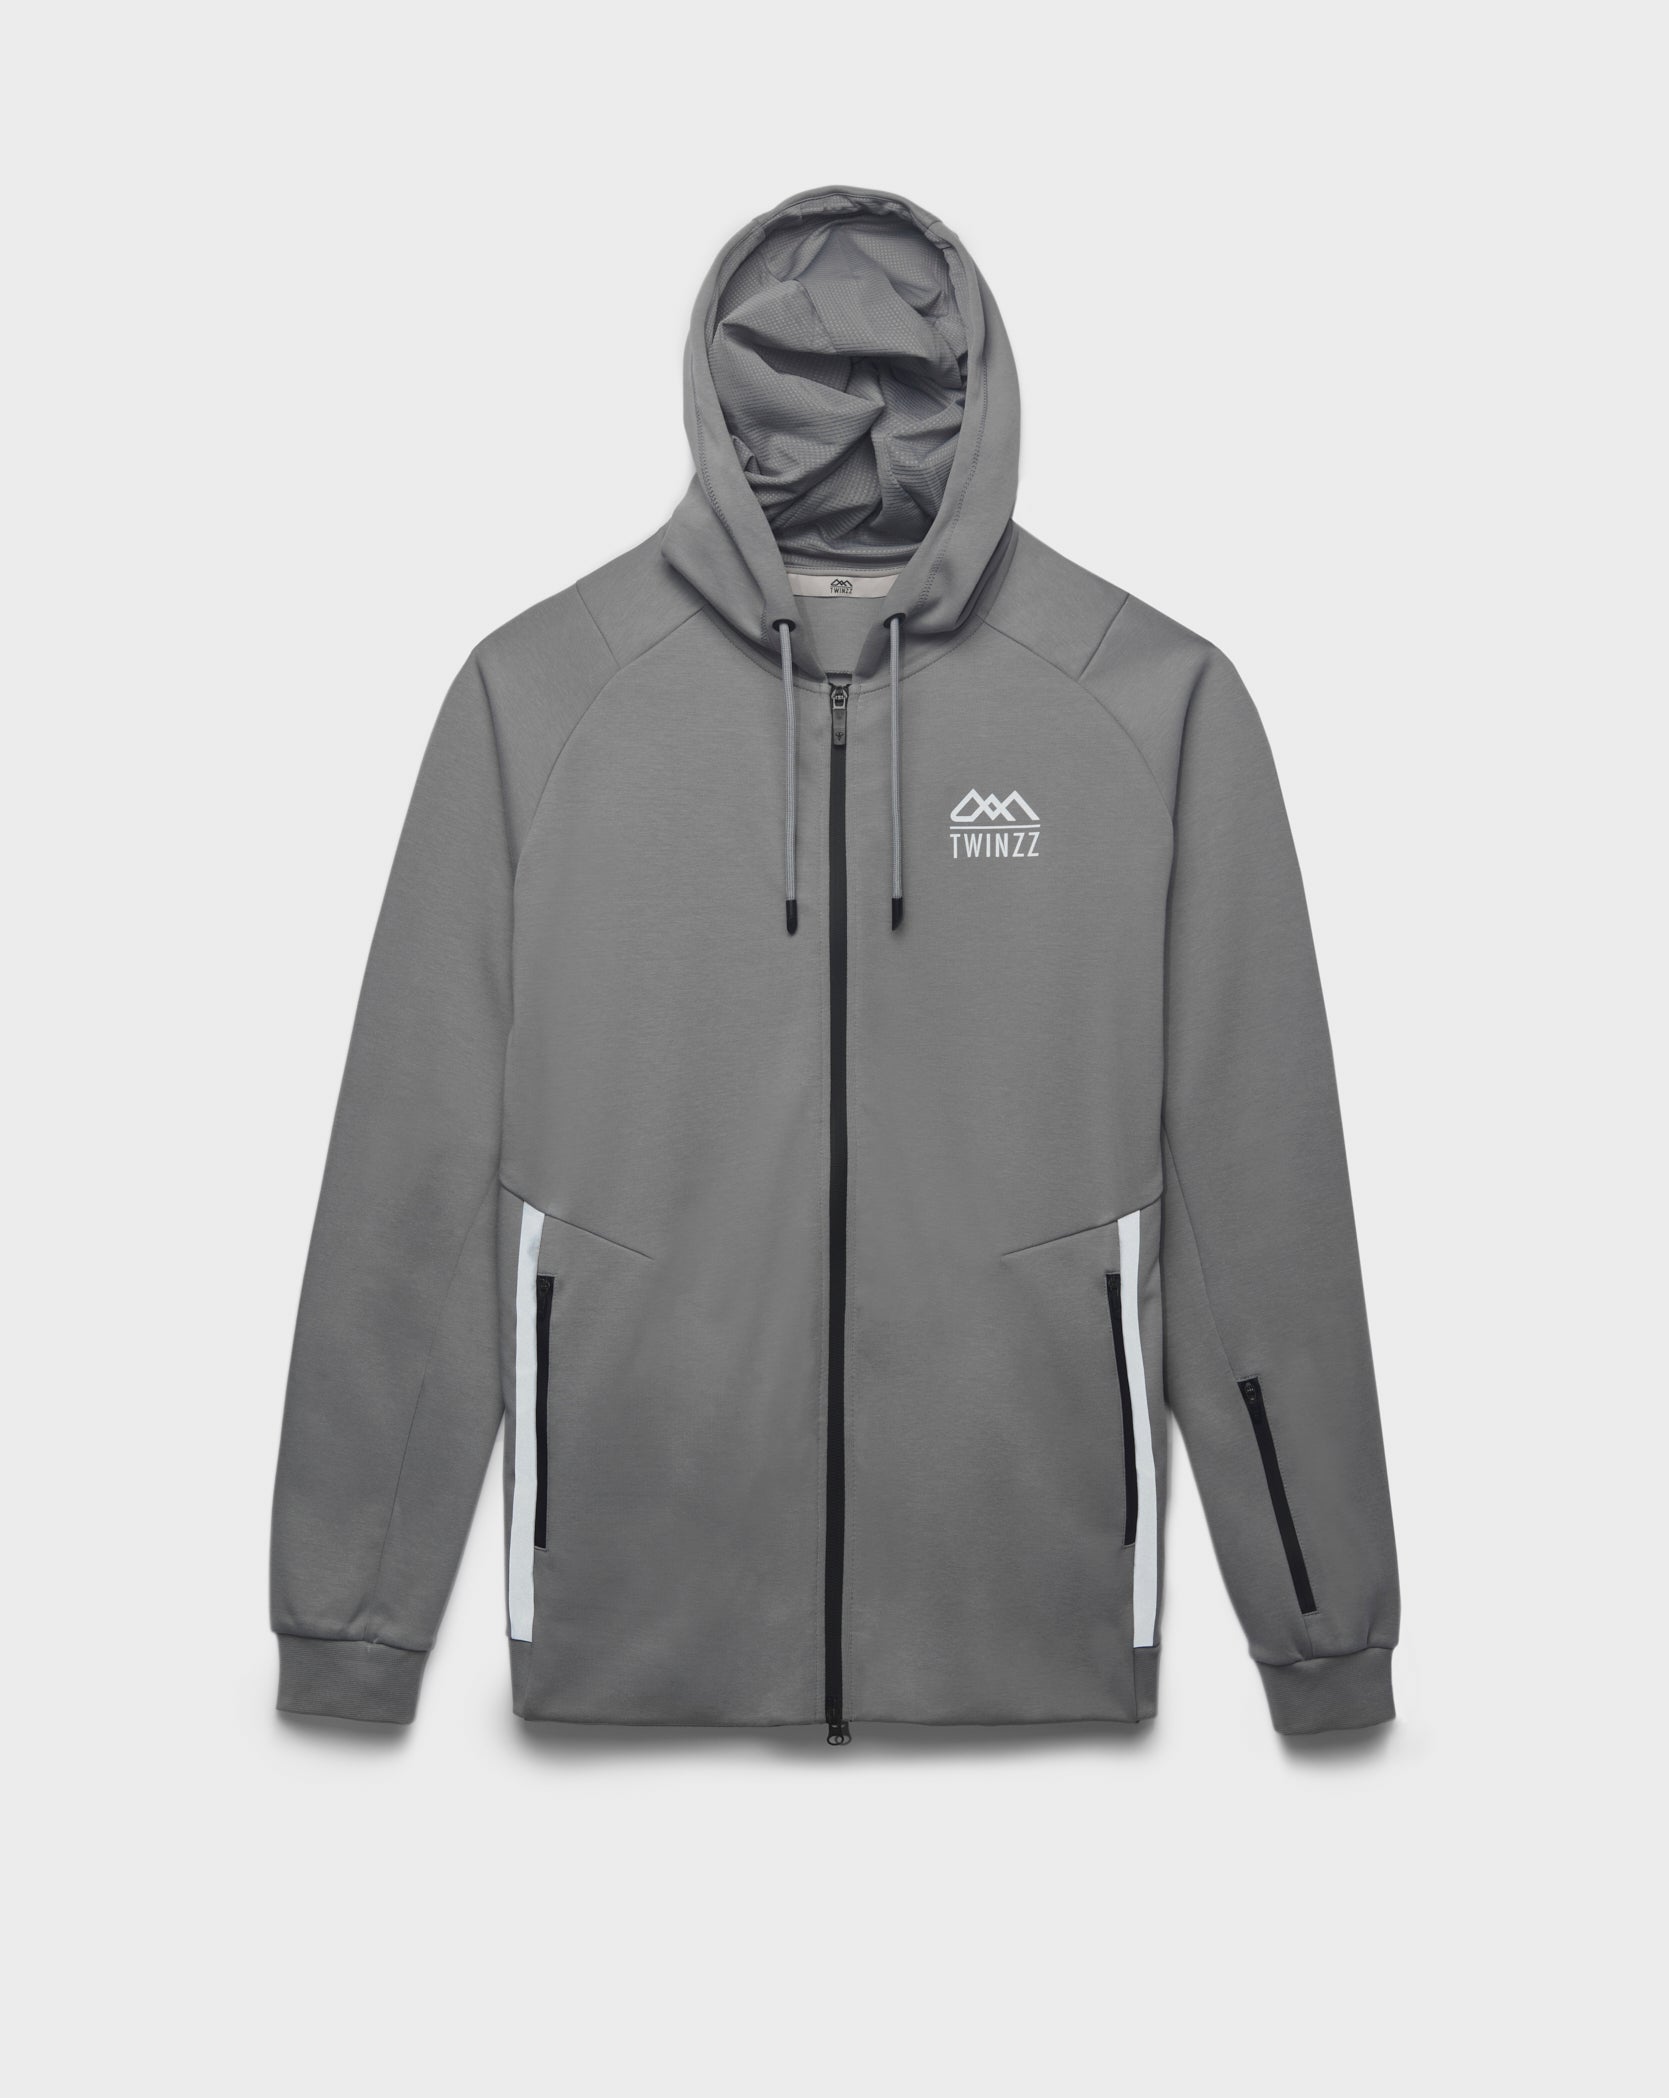 Twinzz grey tech hoodie